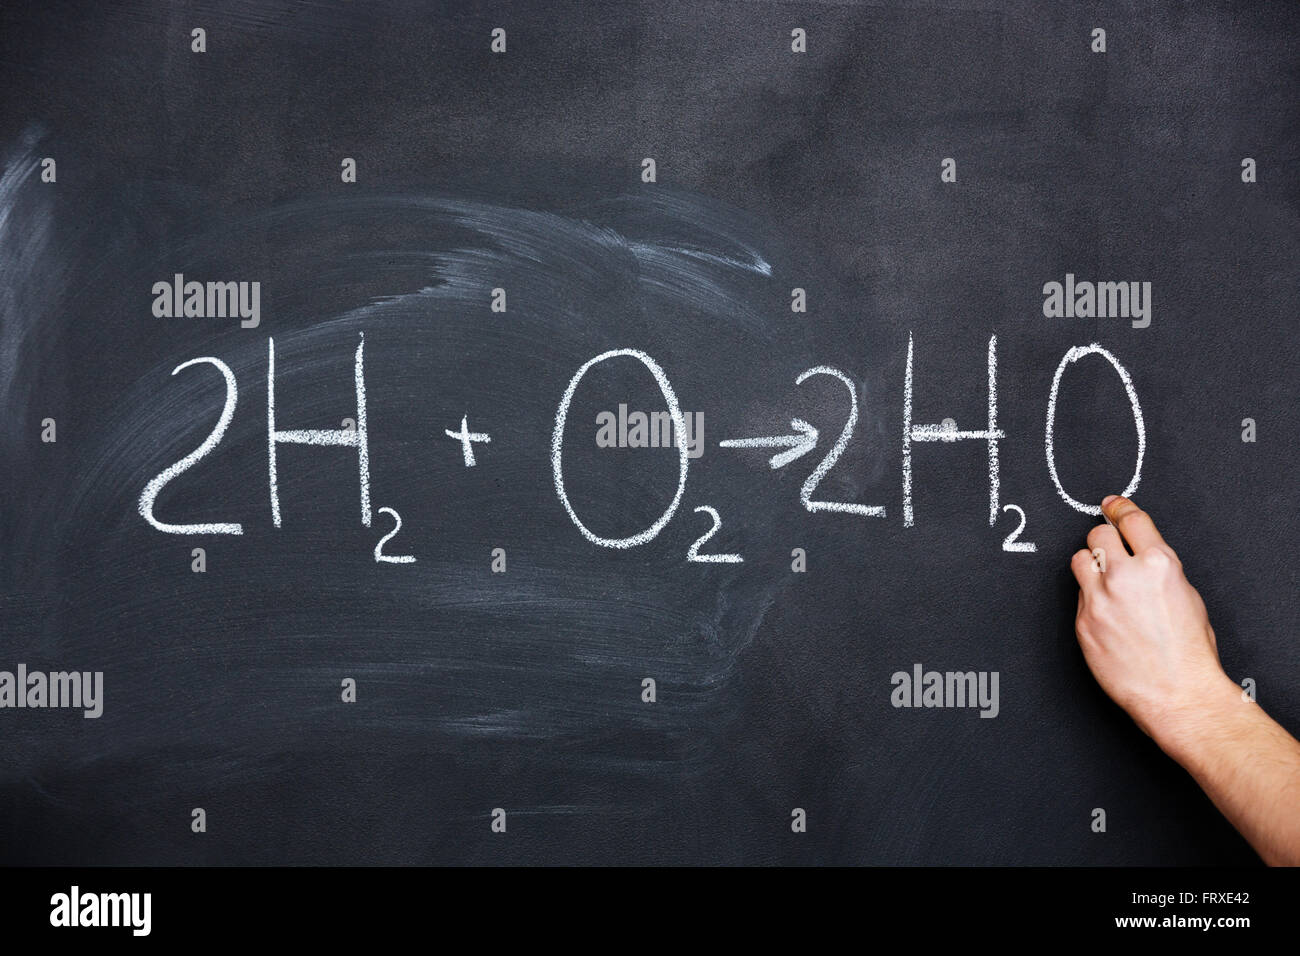 Hand writing chemical formula on blackboard with chalk Stock Photo